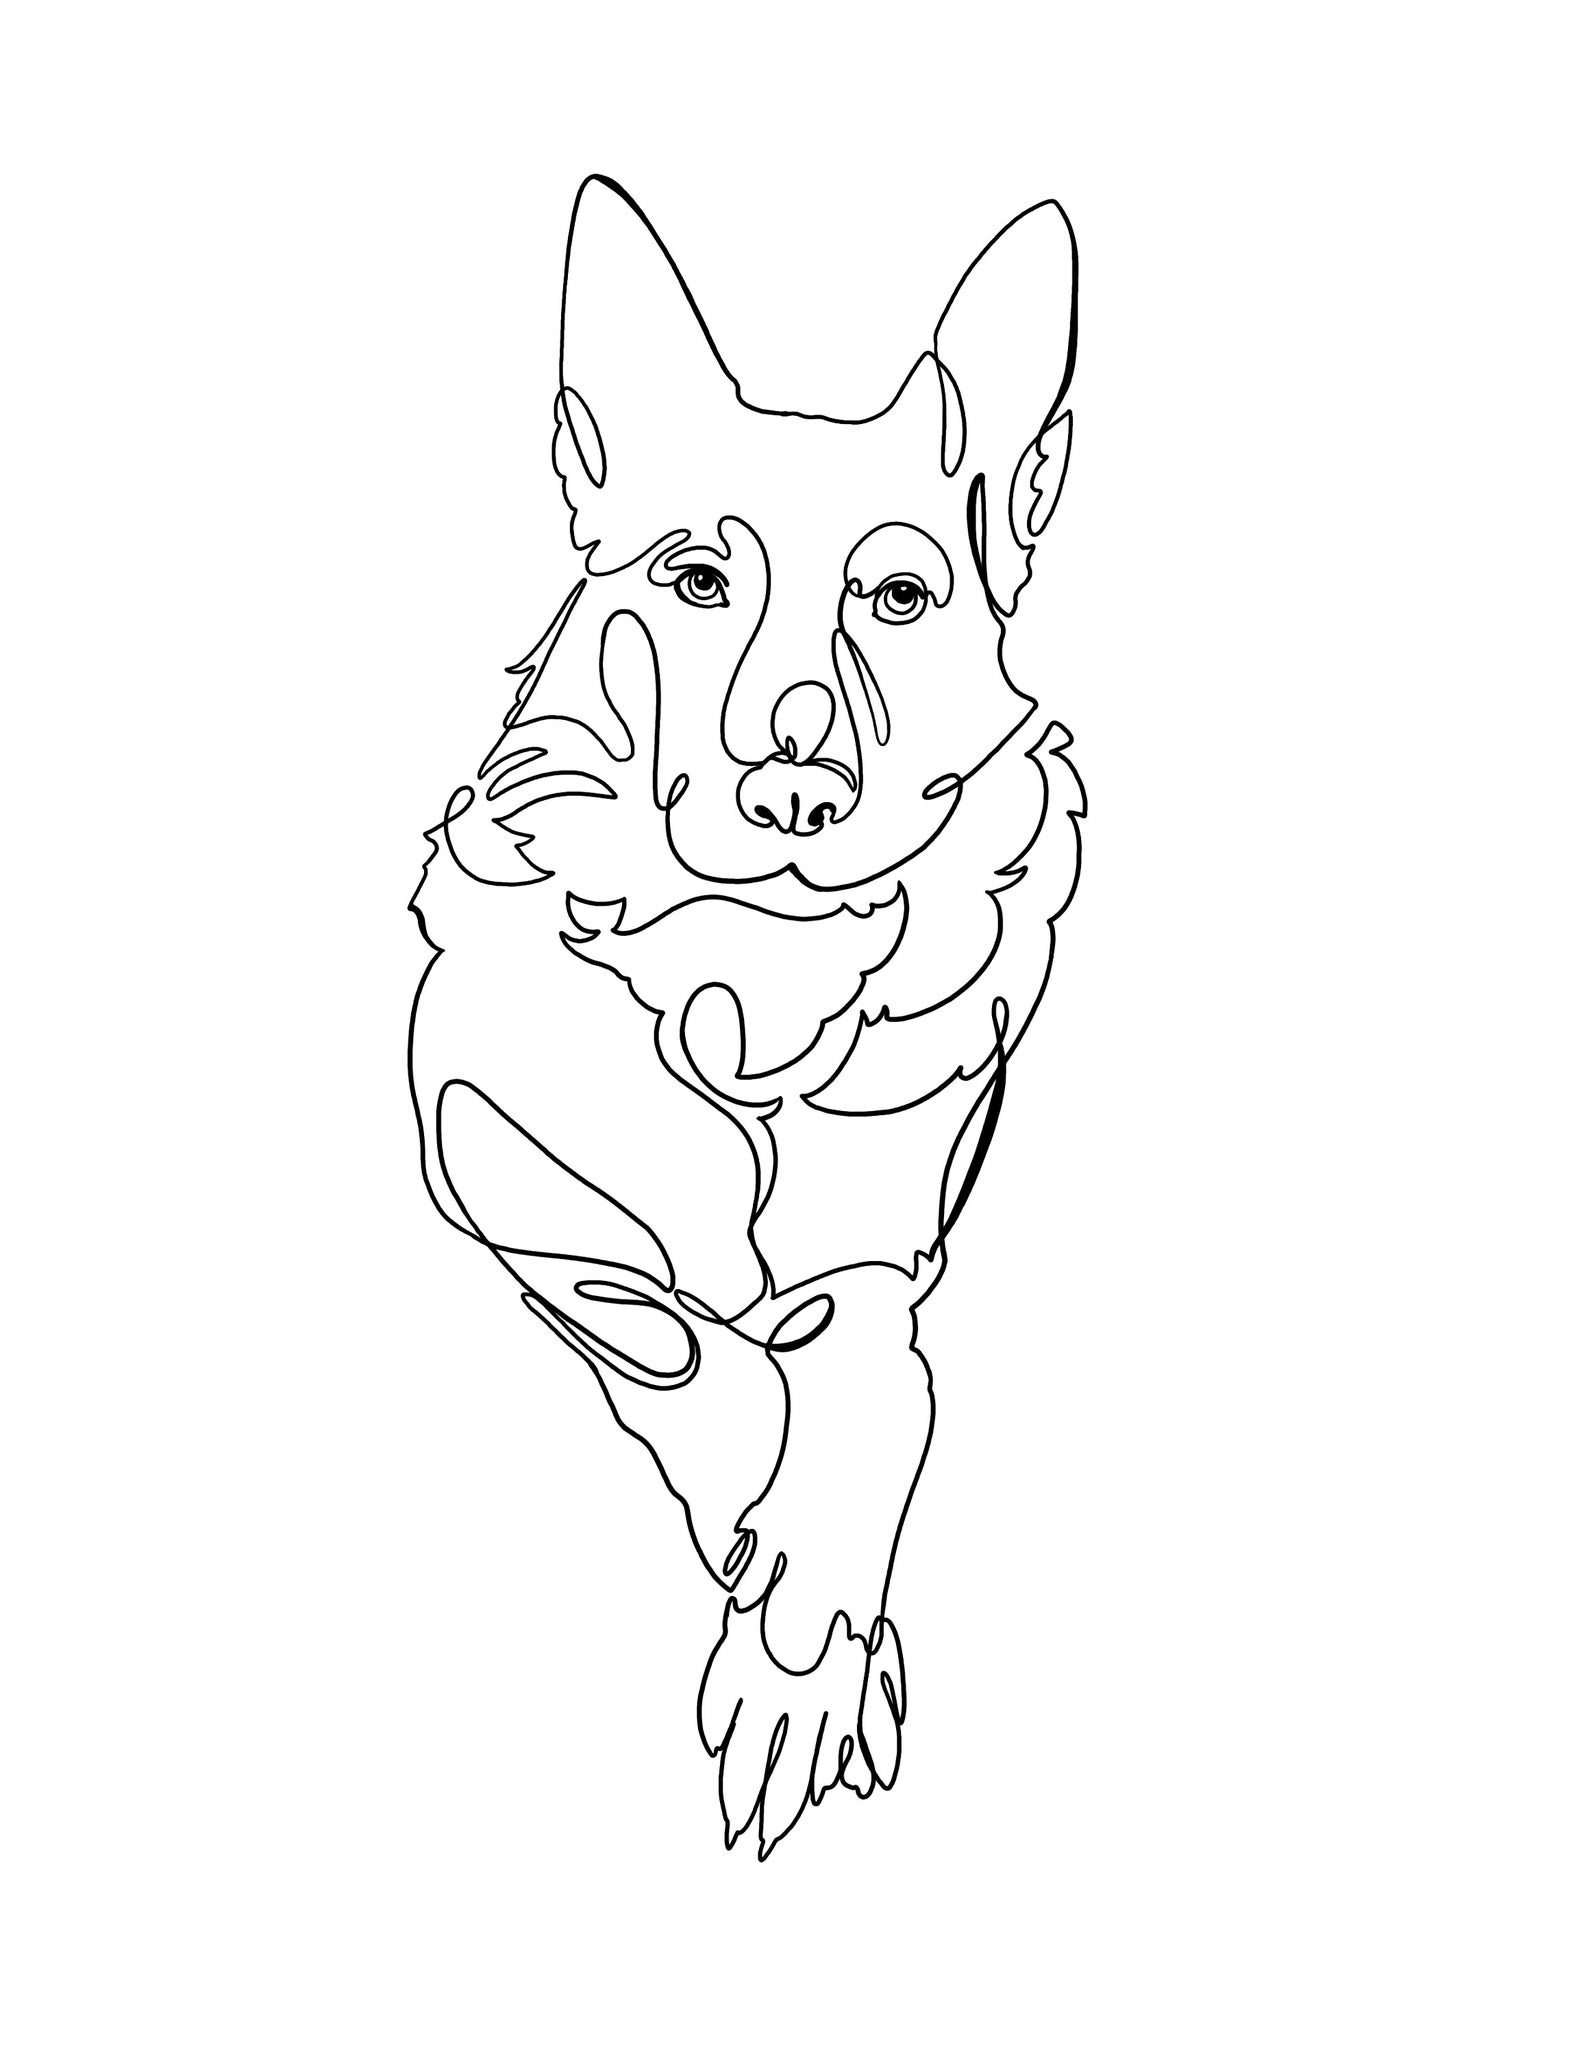 One line drawing of German shepherd dog | Etsy